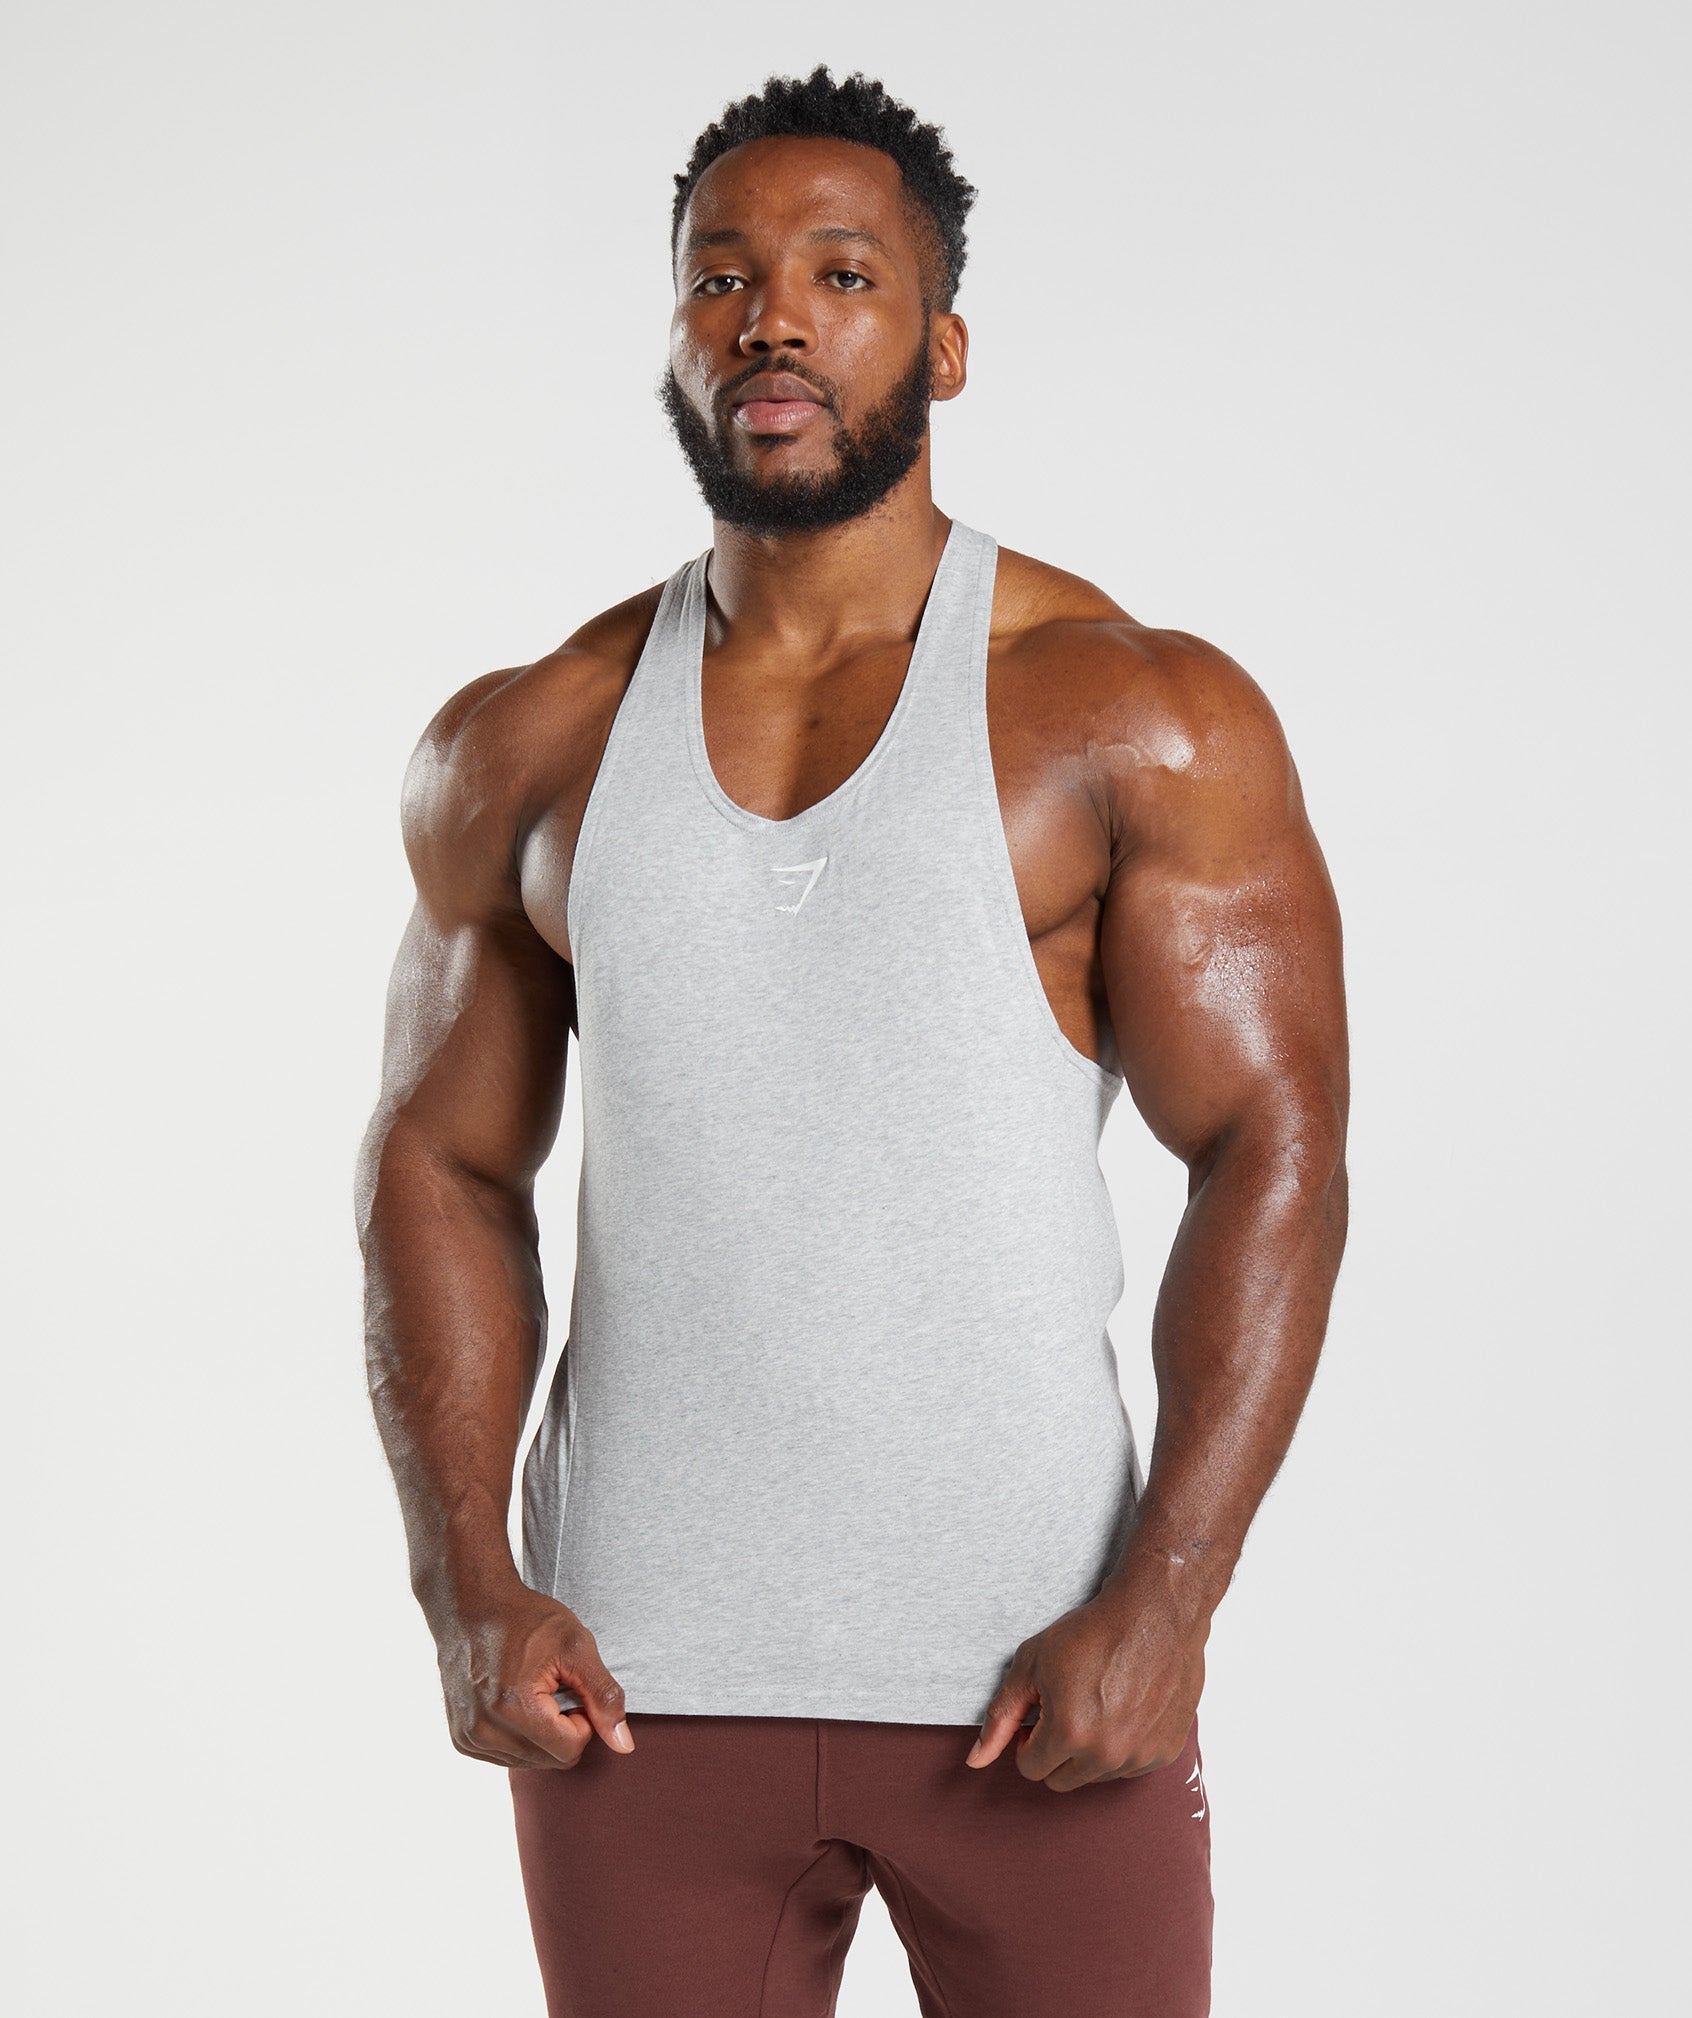 Men Vivid Gymshark Clothing Fashion Stringer Tank Tops Low Cut